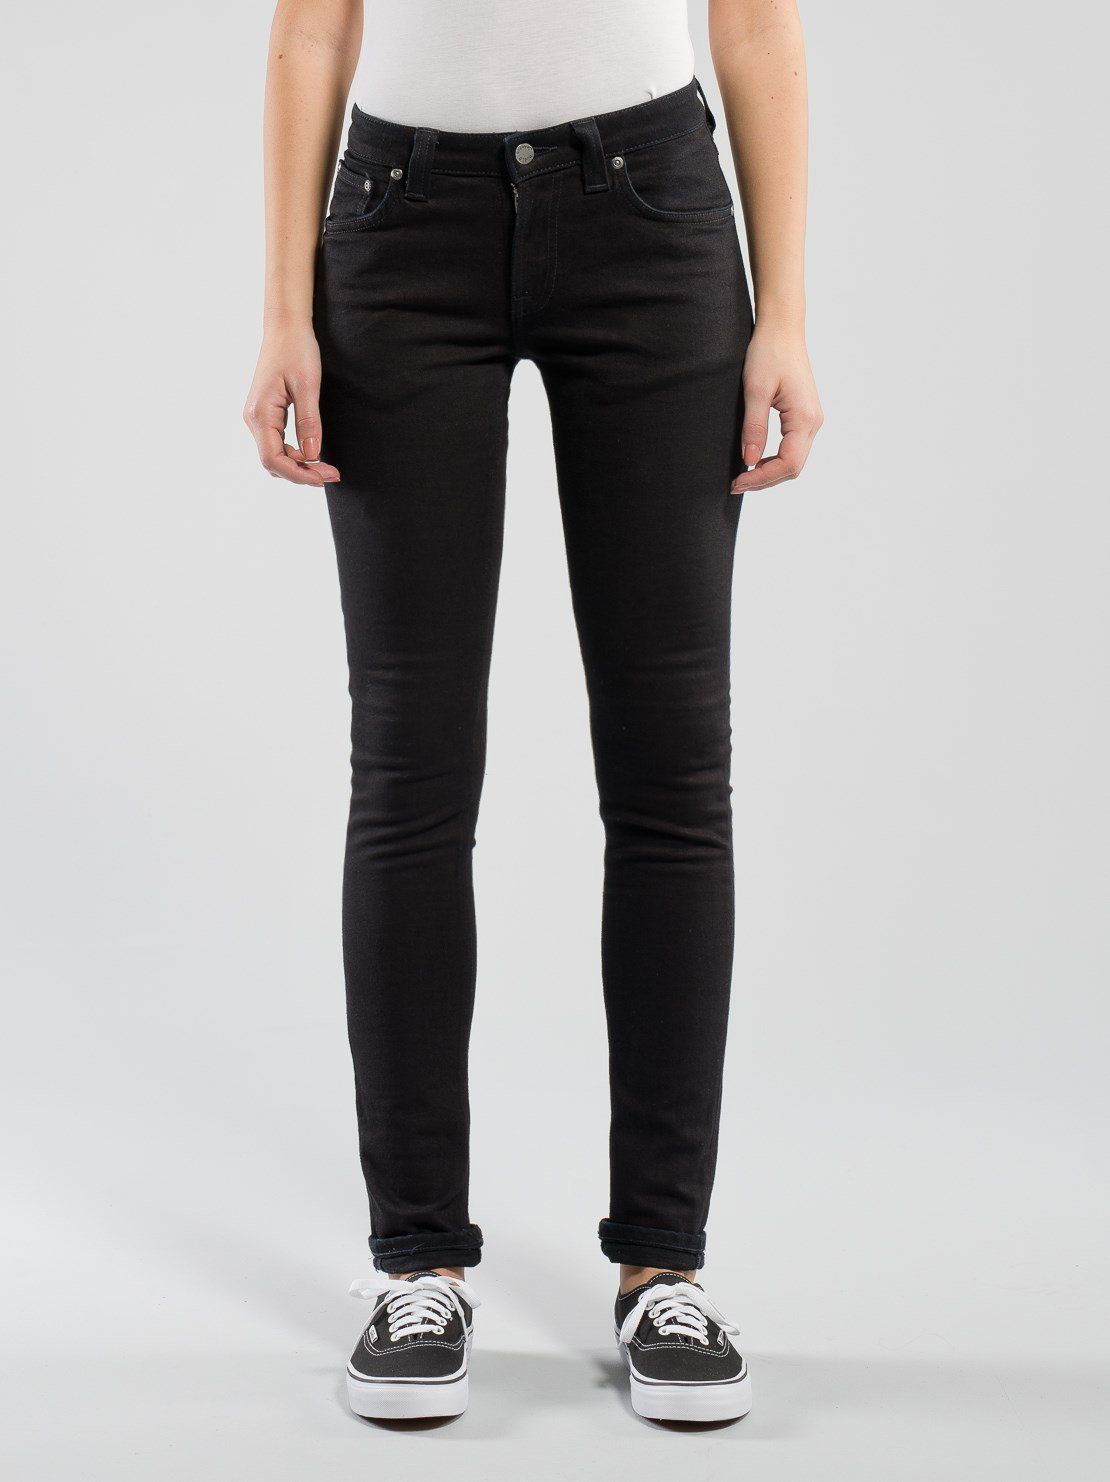 Nudie Jeans Skinny-fit-Jeans Damen Stretch Hose - Skinny Lin Black Black